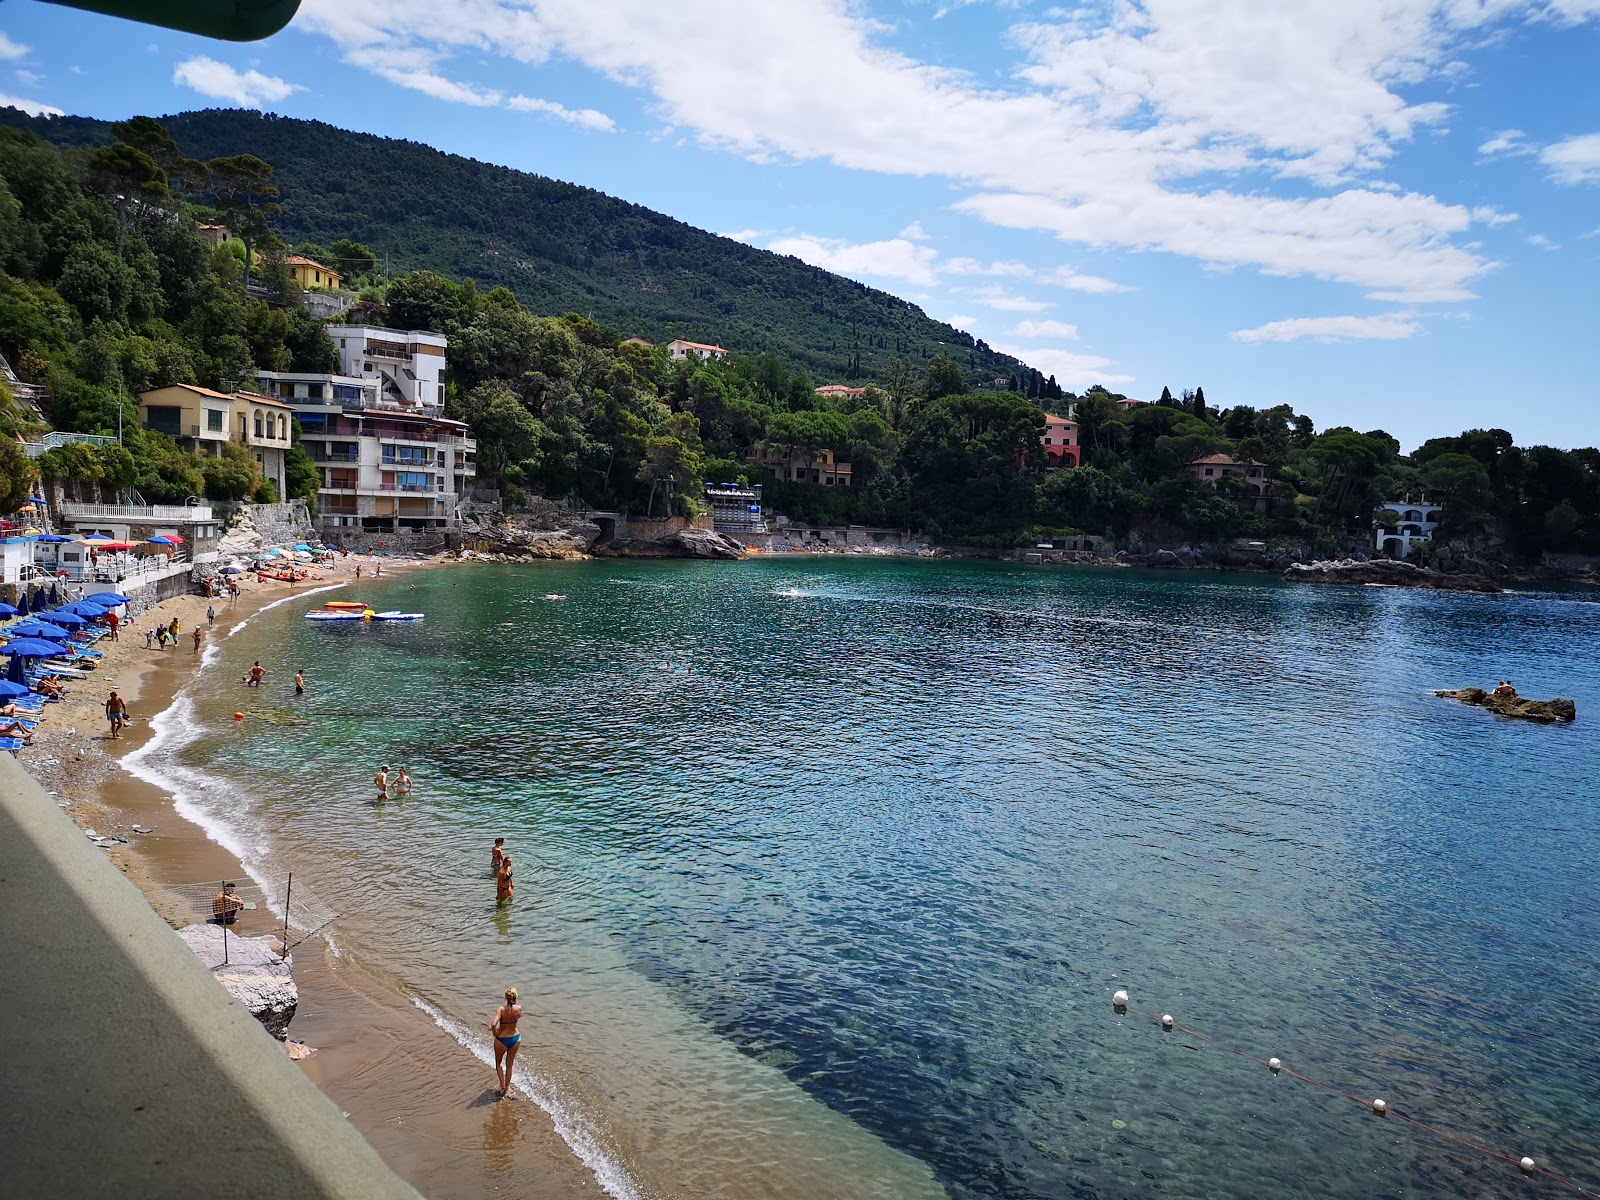 Fotografija Spiaggia Fiascherino z modra voda površino